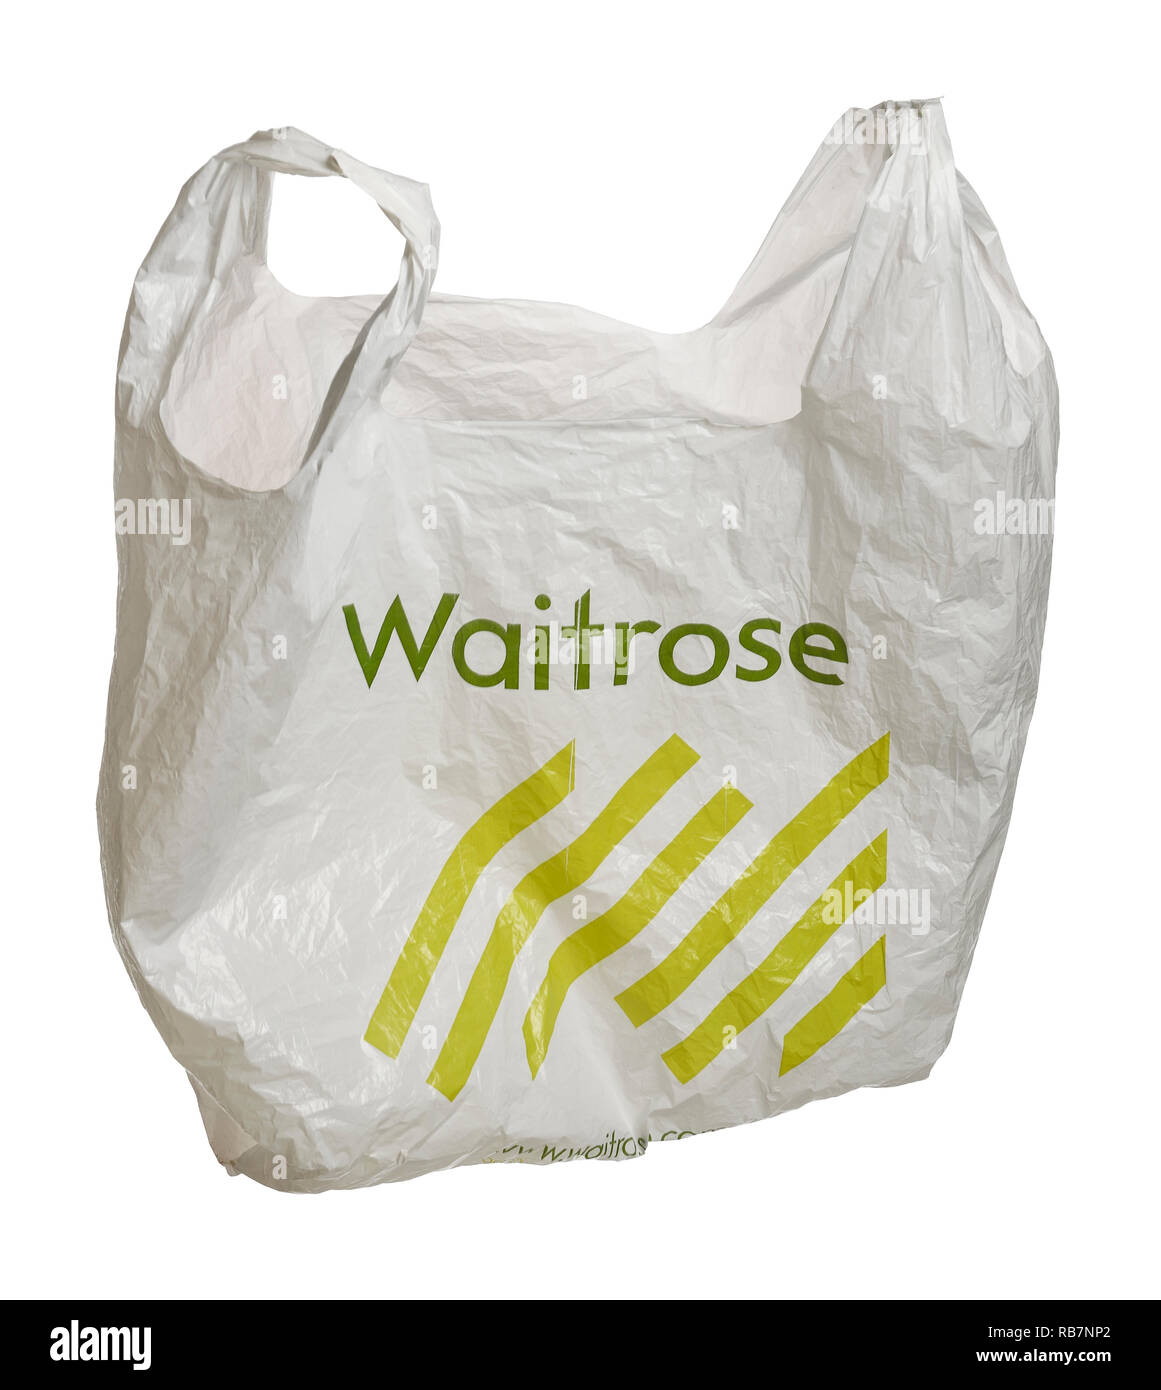 A Waitrose supermarket carrier bag Stock Photo - Alamy